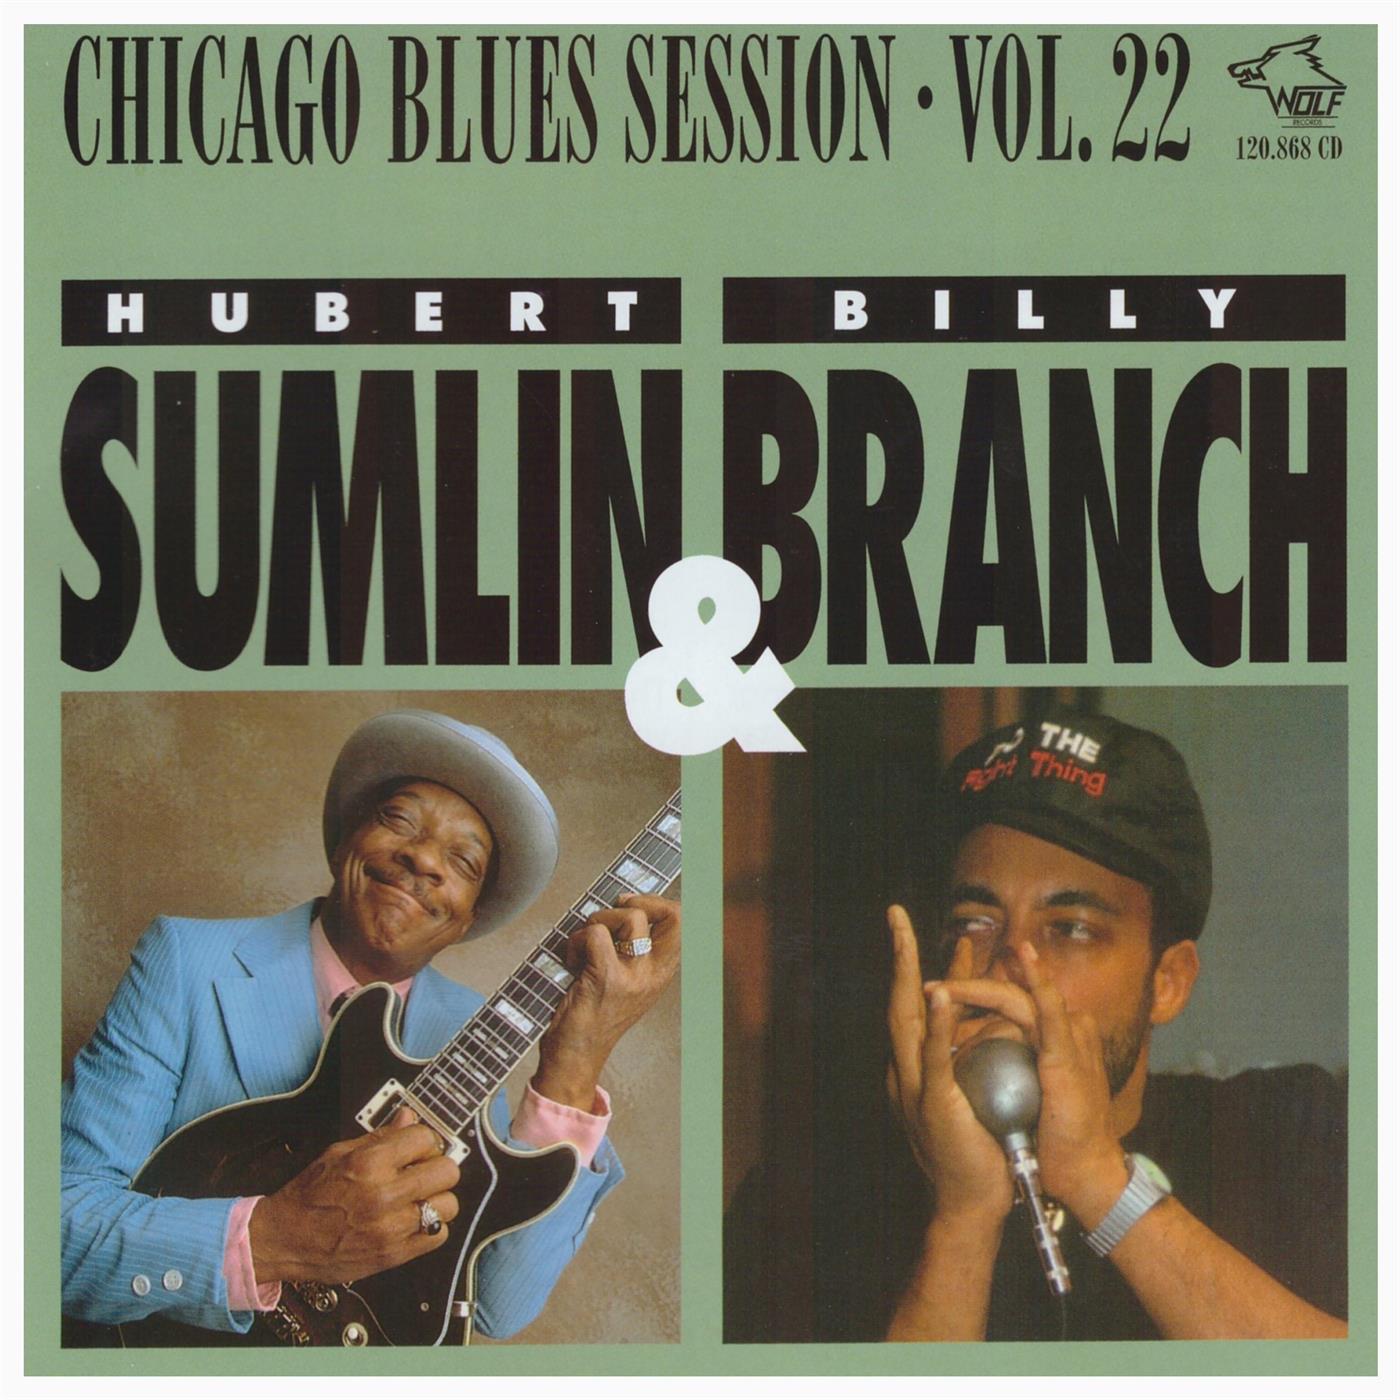 Chicago Blues Session Vol. 22